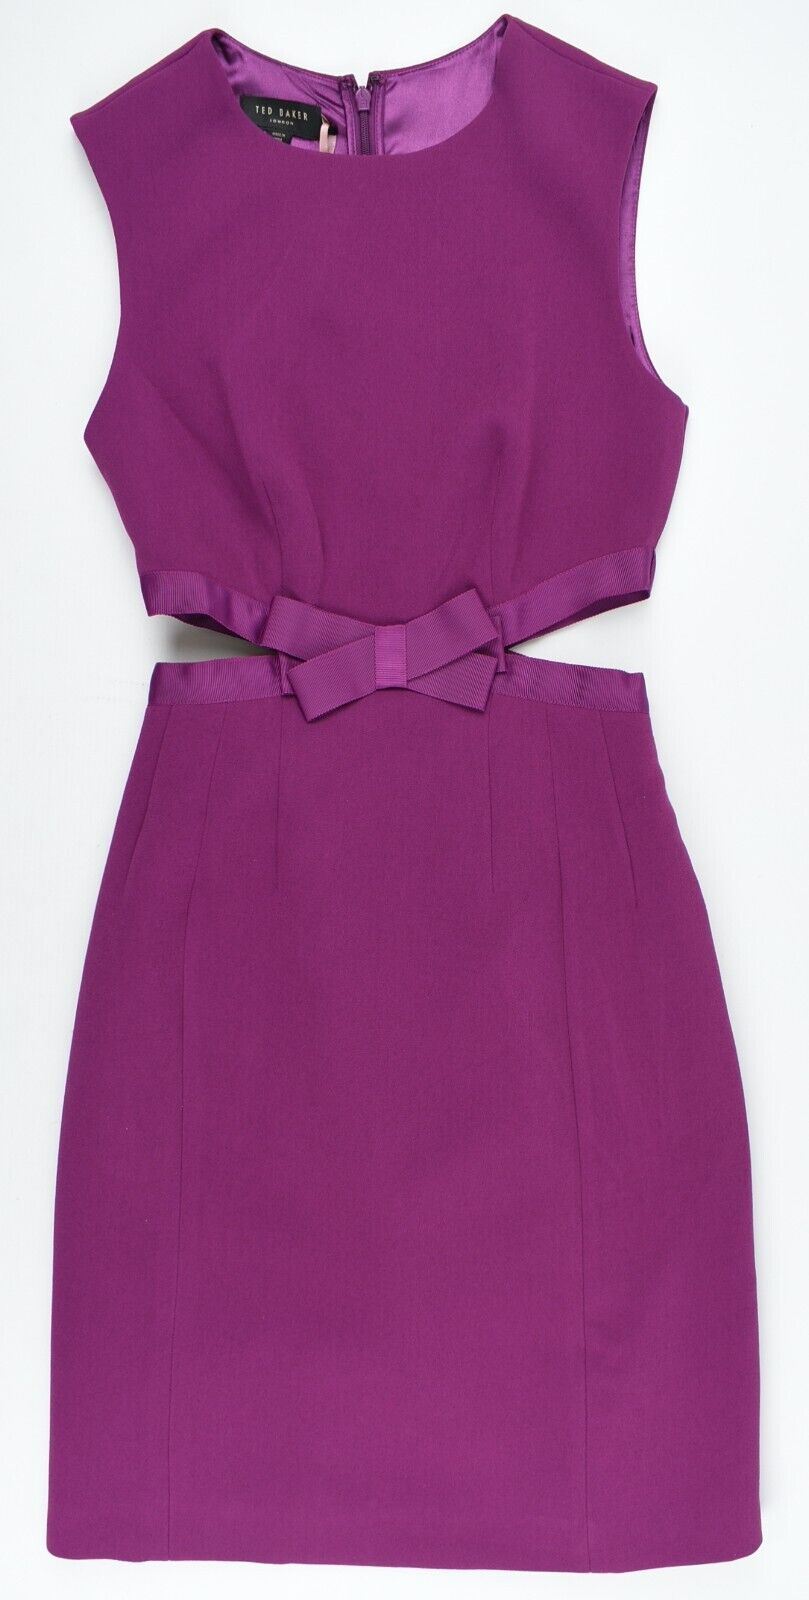 TED BAKER Women's JAYCEE Cut Out Bow Dress, Grape Purple, size UK 6 / Ted size 0